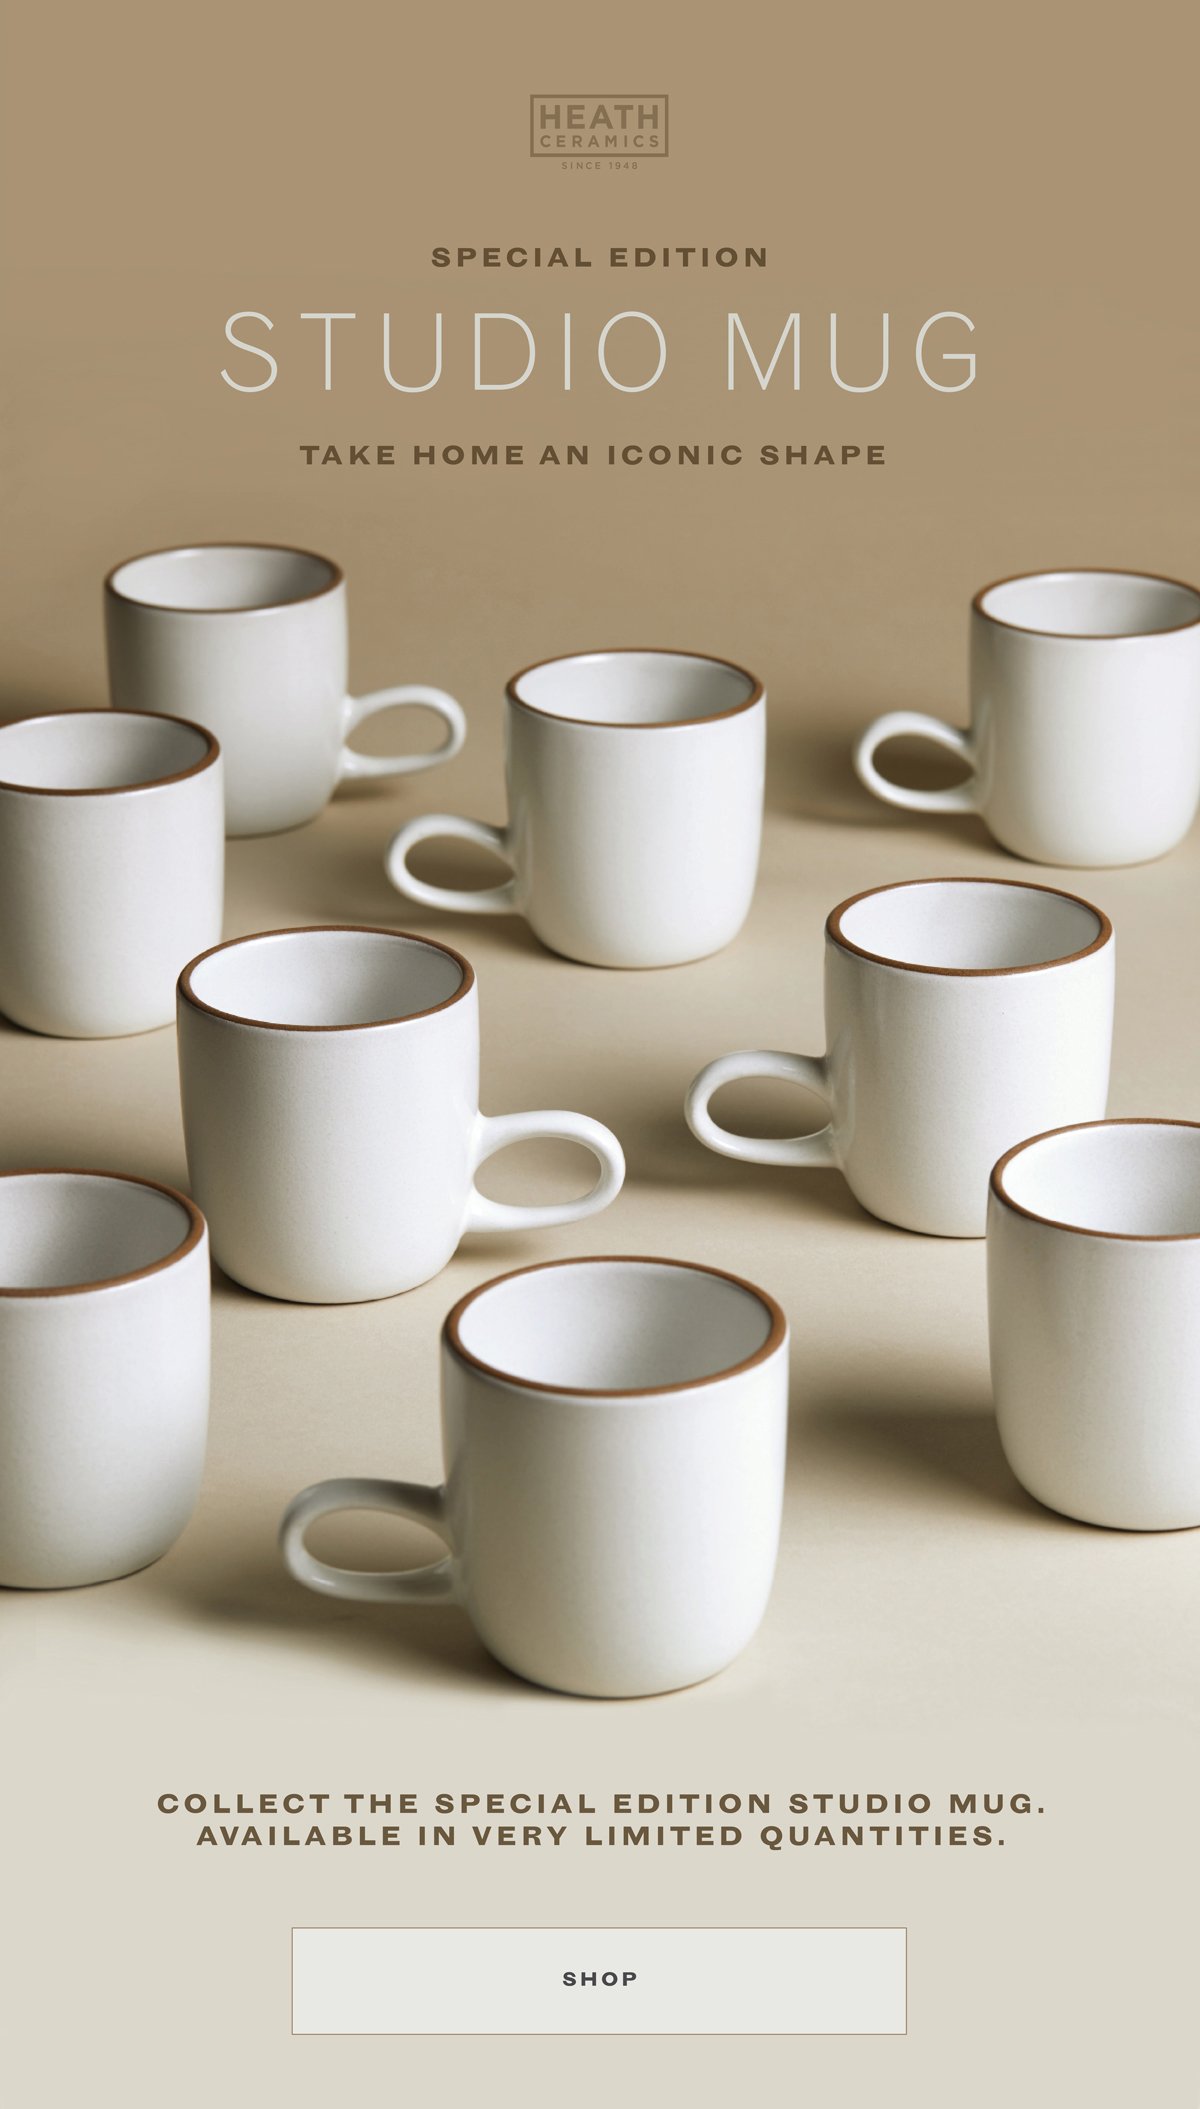 Heath Ceramics: Special Edition Launch! The Iconic Studio Mug | Milled